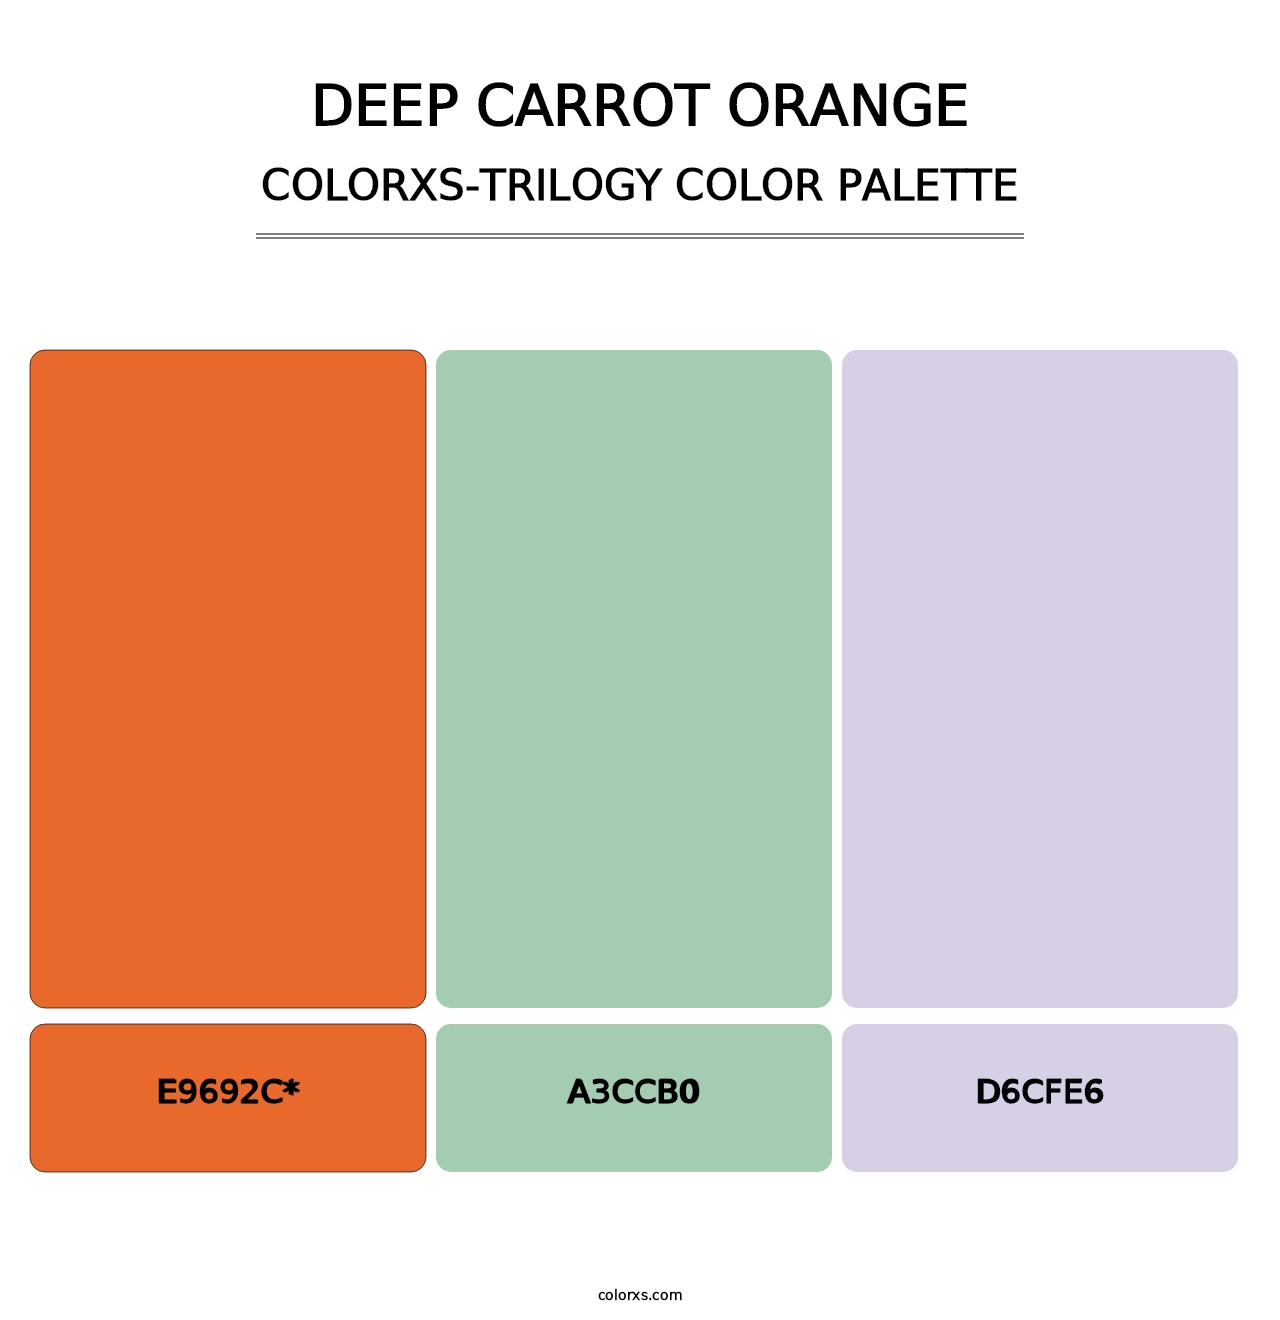 Deep Carrot Orange - Colorxs Trilogy Palette